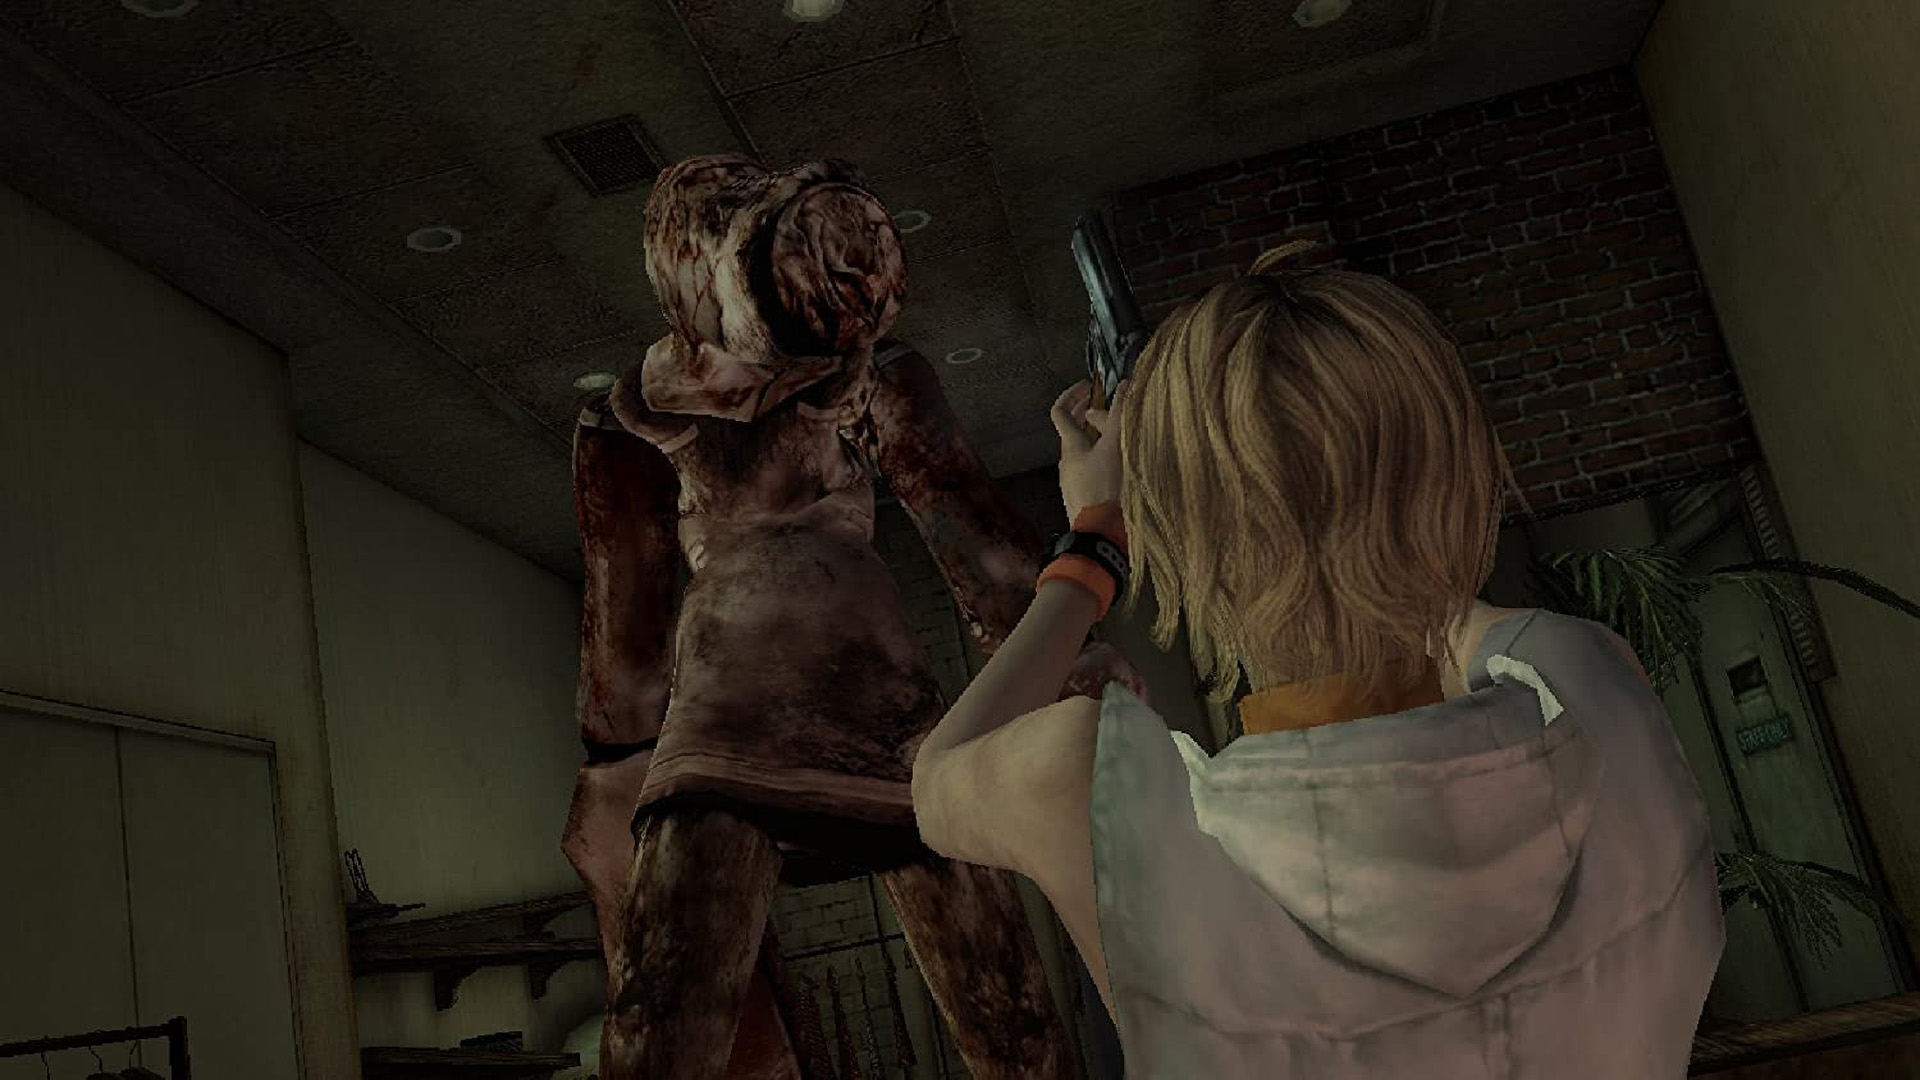 Jogo Silent Hill HD Collection - PS3 no Paraguai - Atacado Games - Paraguay